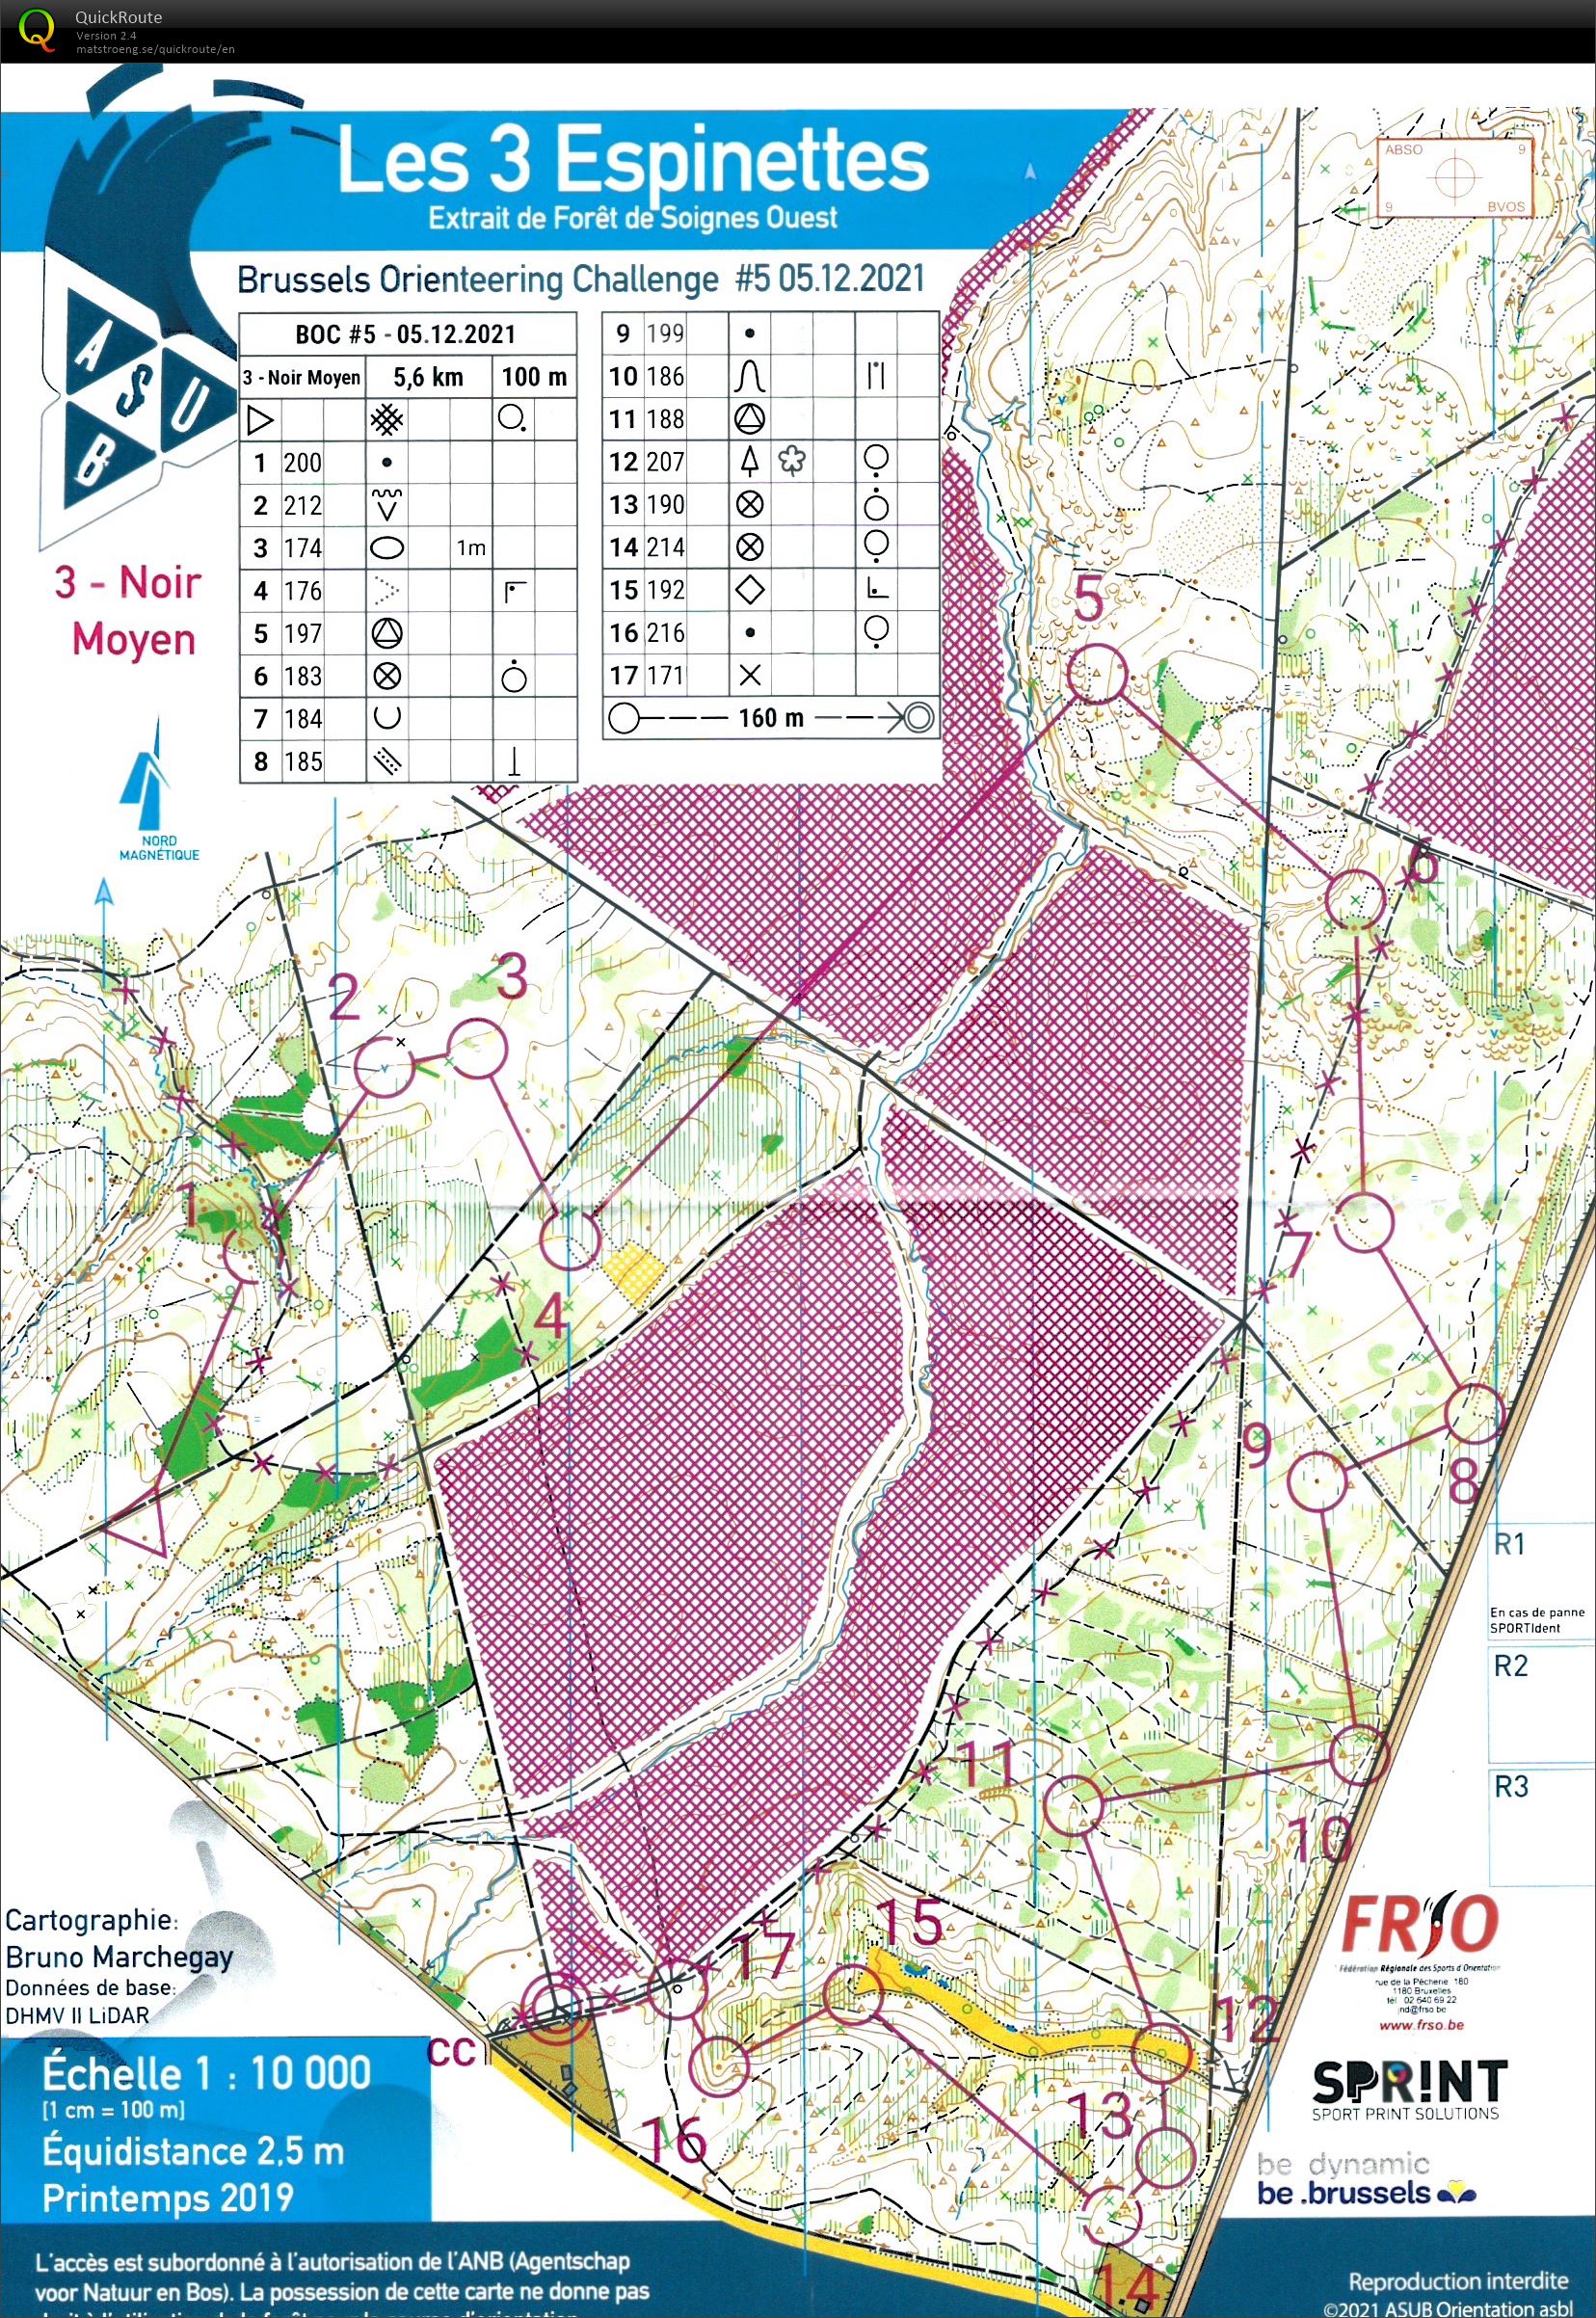 Brussels Orienteering Challenge - Sint-Genesius-Rode (05/12/2021)